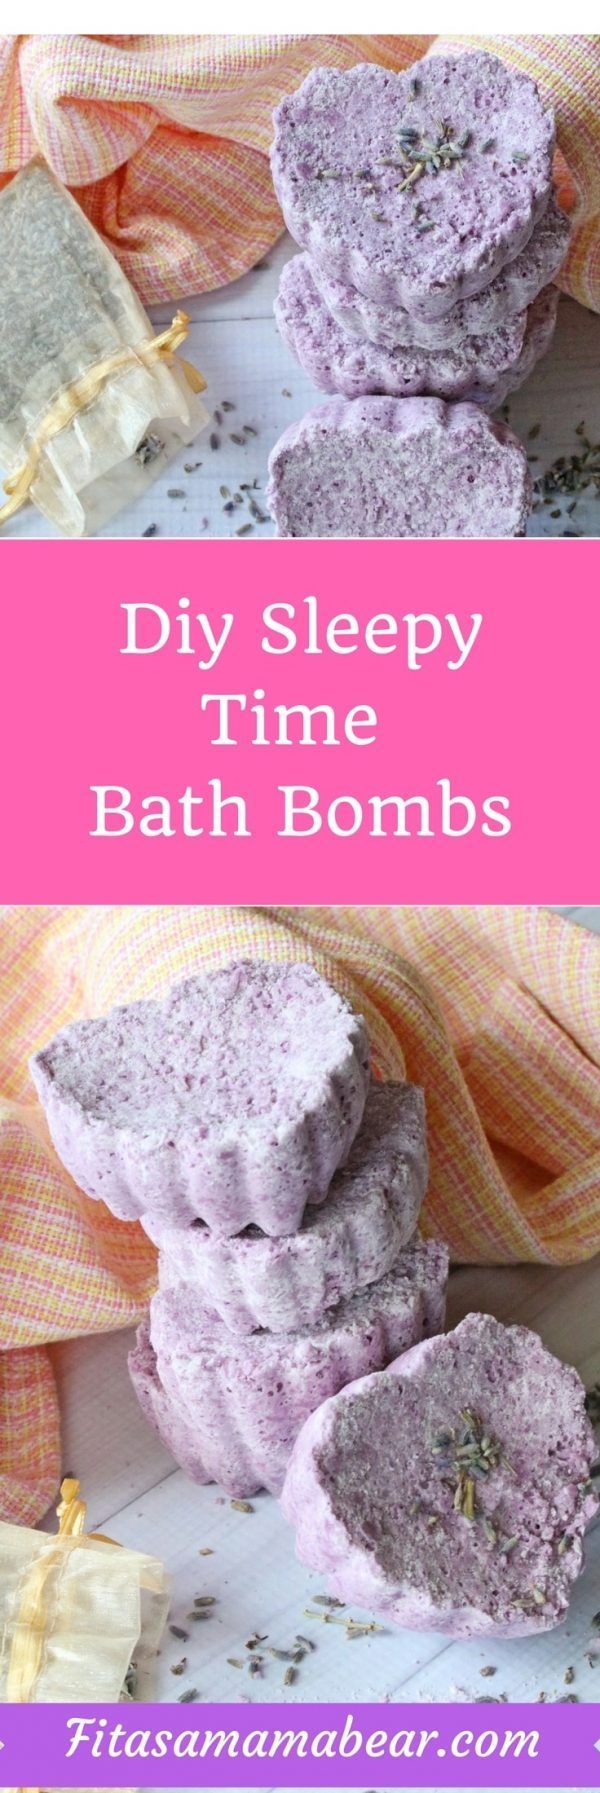 Diy Sleepy Time Bath Bombs -   17 diy projects To Try homemade ideas